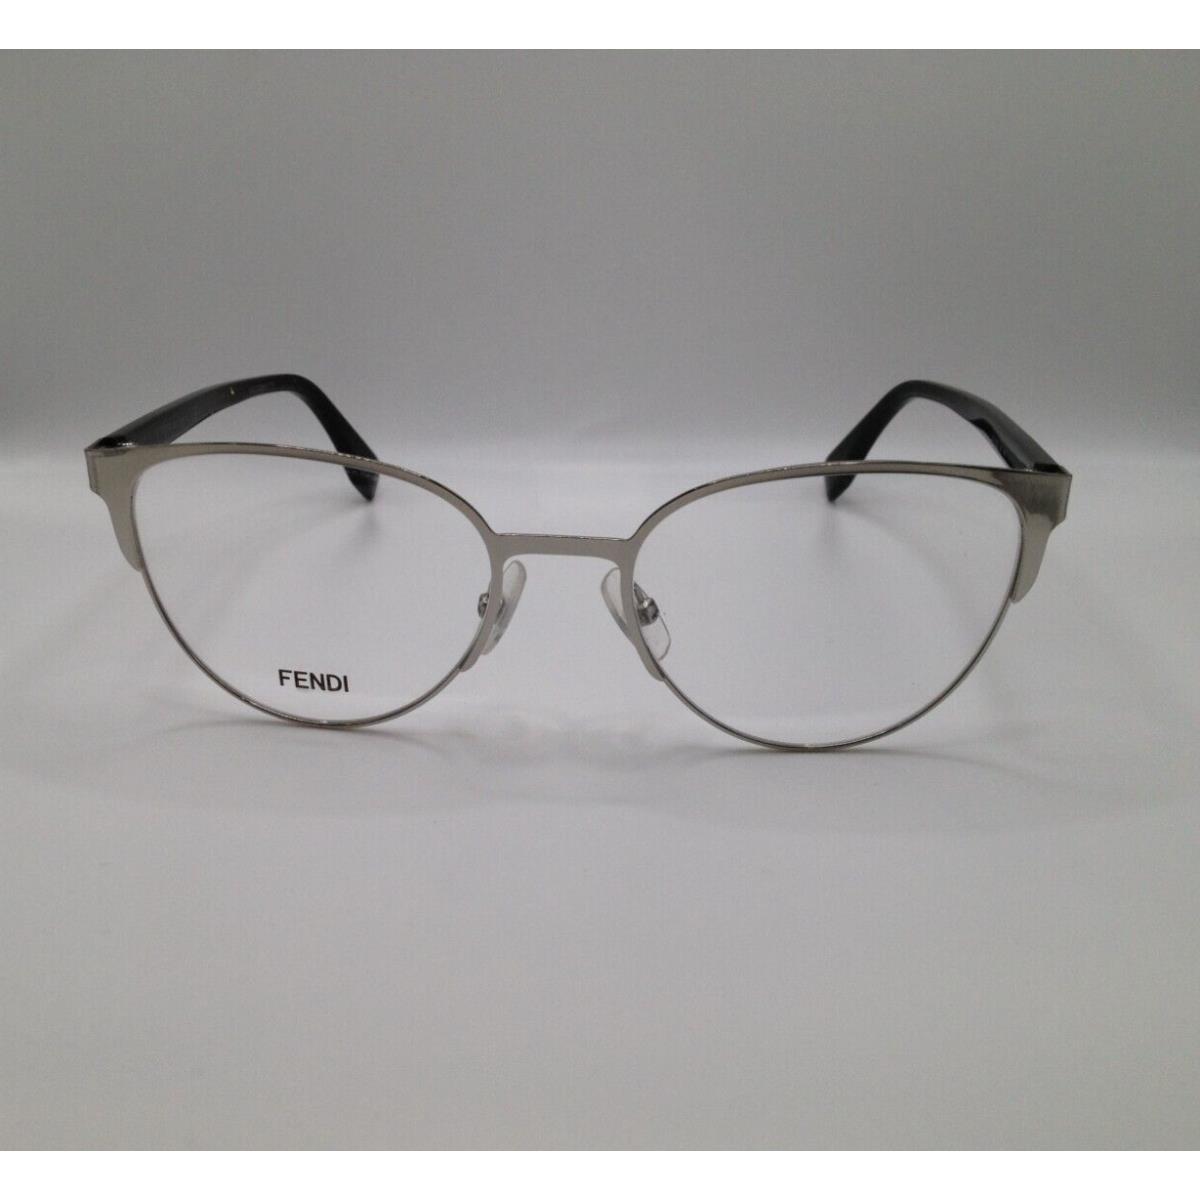 Fendi FF 0320 010 Silver Brown Metal Optical Eyeglasses Frame 53-18-140 RX